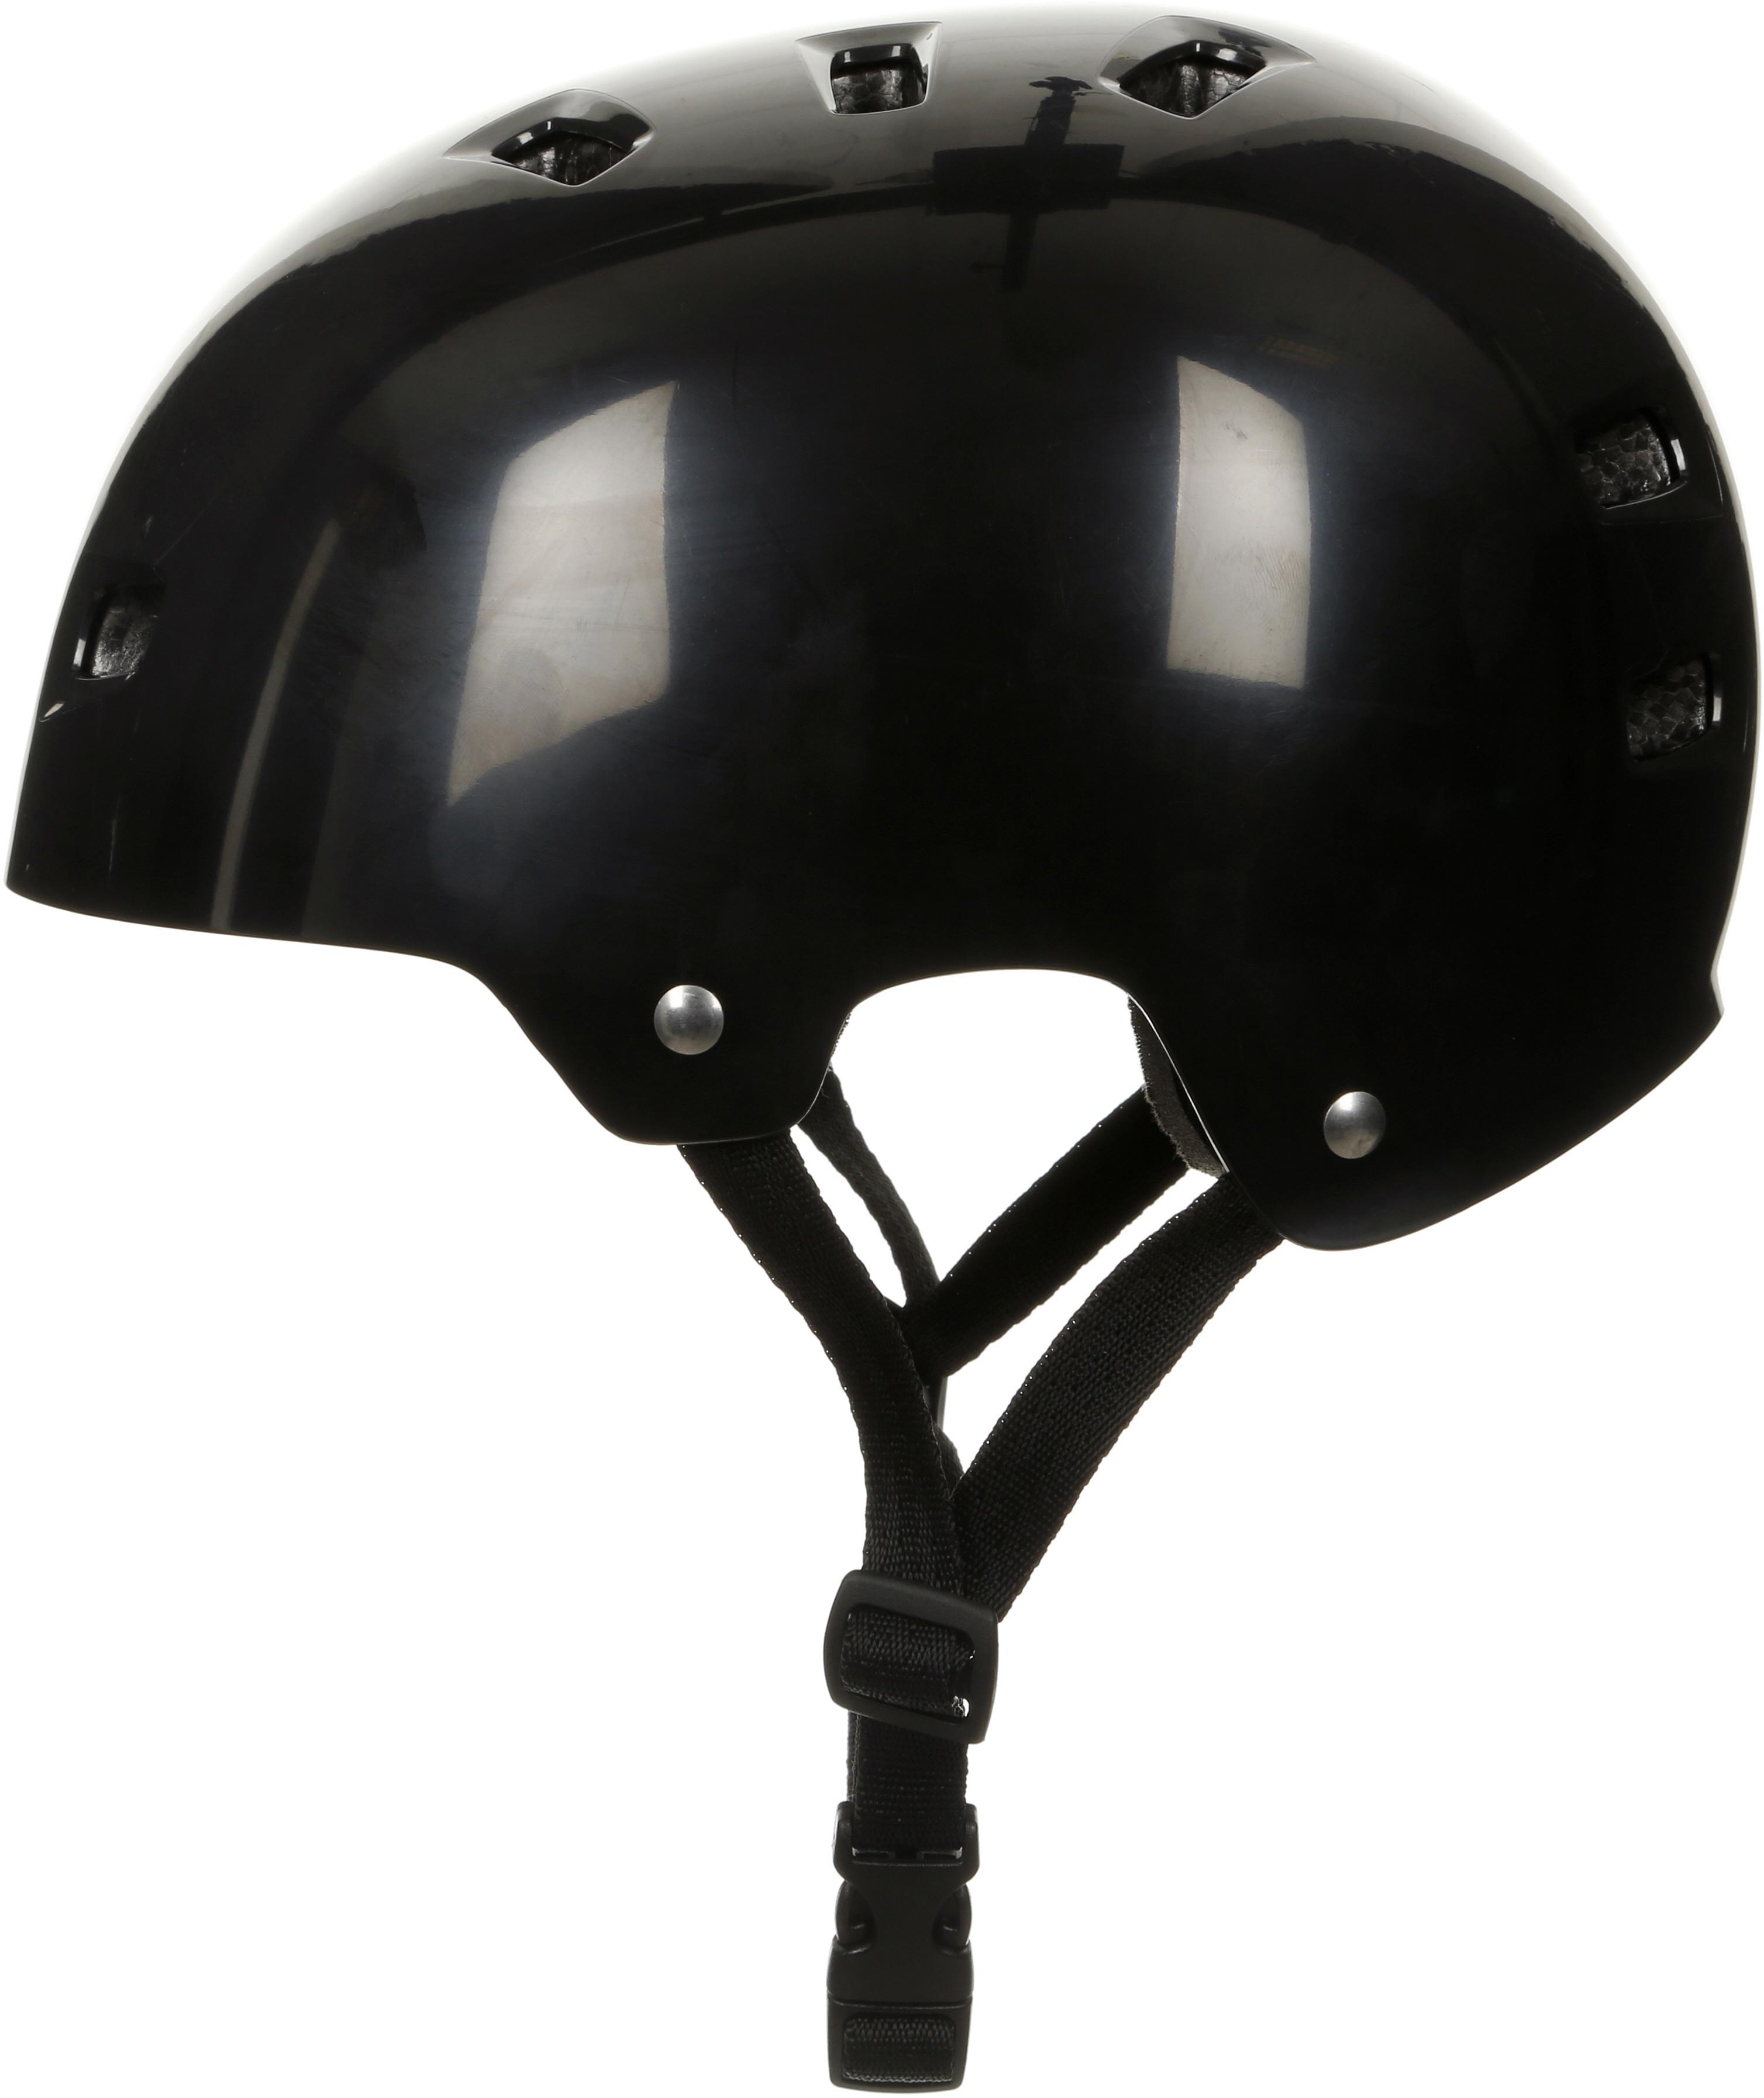 Halfords Essential Skate Helmet, Black Gloss - Large